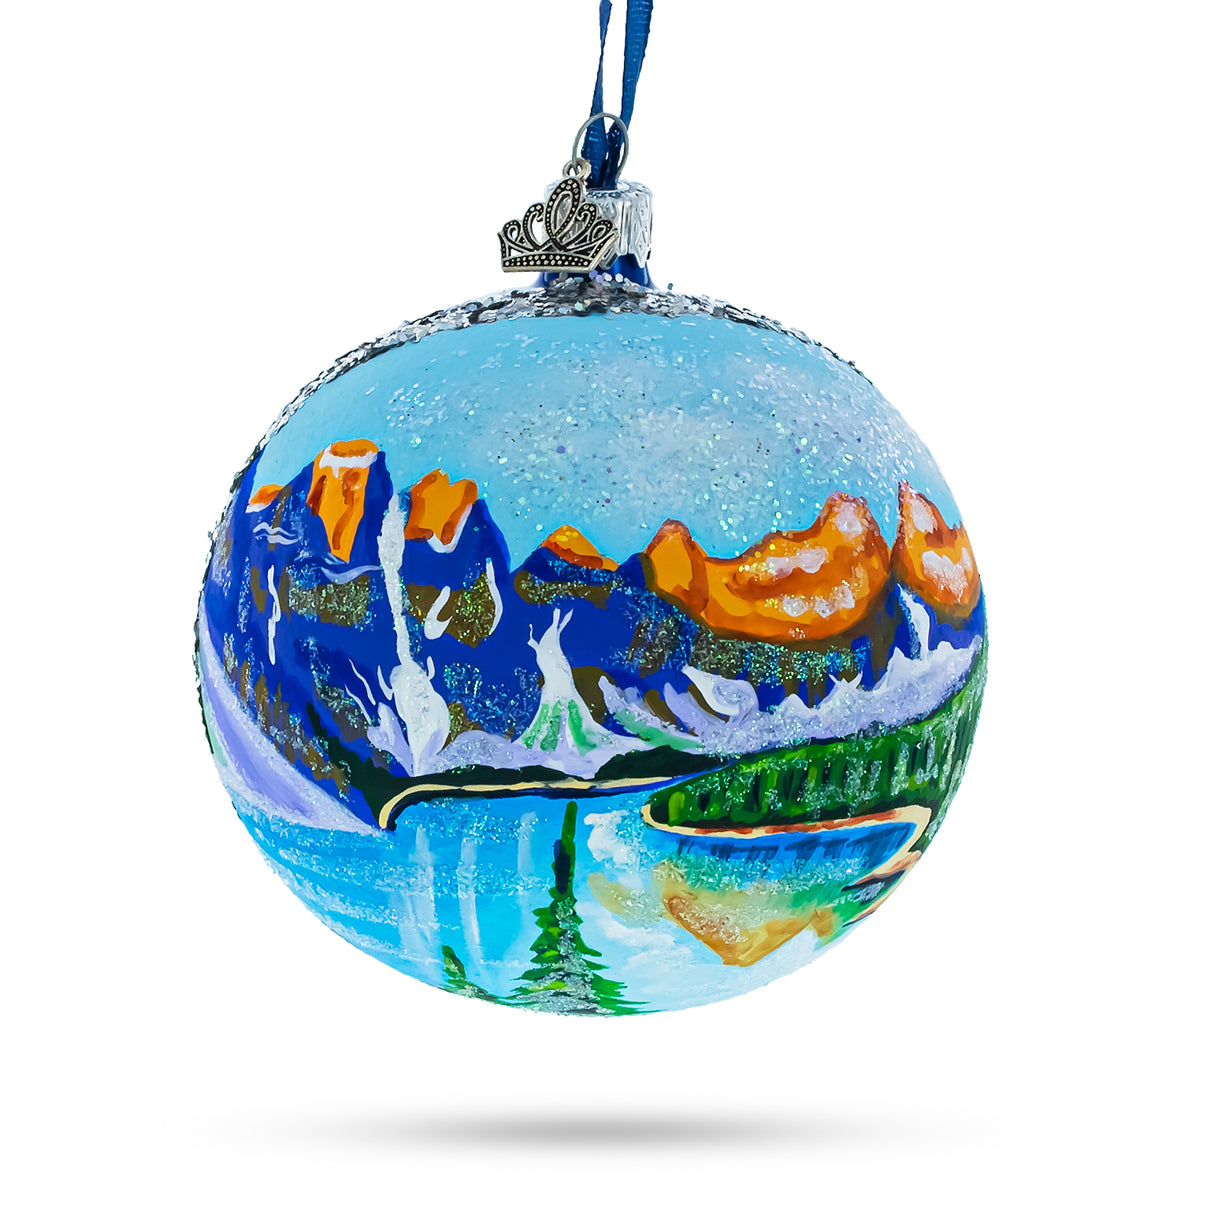 Moraine Lake, Alberta Province, Canada Glass Ball Christmas Ornament 4 Inches in Multi color, Round shape